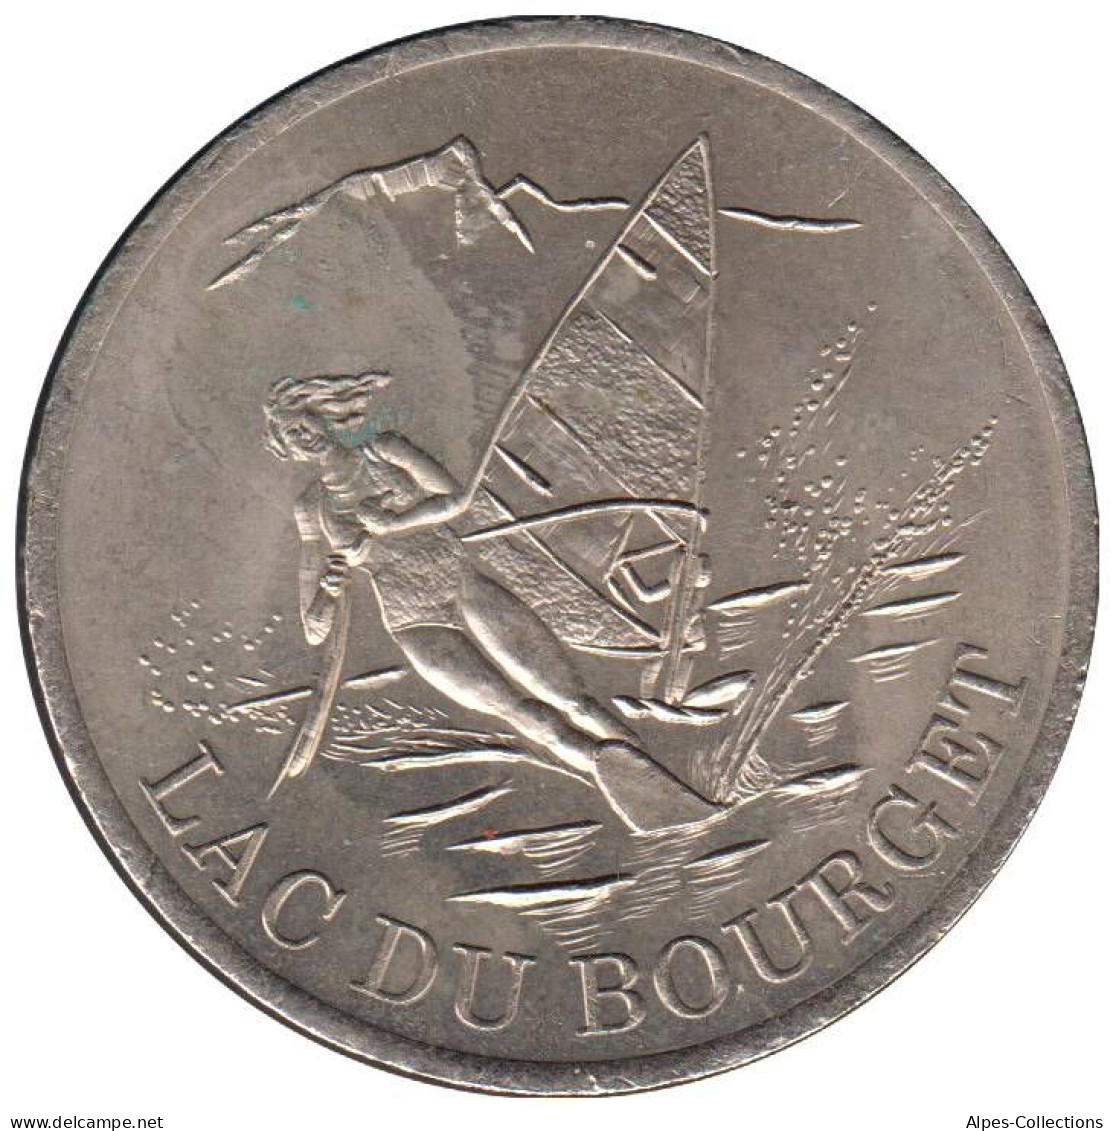 AIX LES BAINS - EU0020.2 - 2 EURO DES VILLES - Réf: T419 - 1998 - Euros Of The Cities